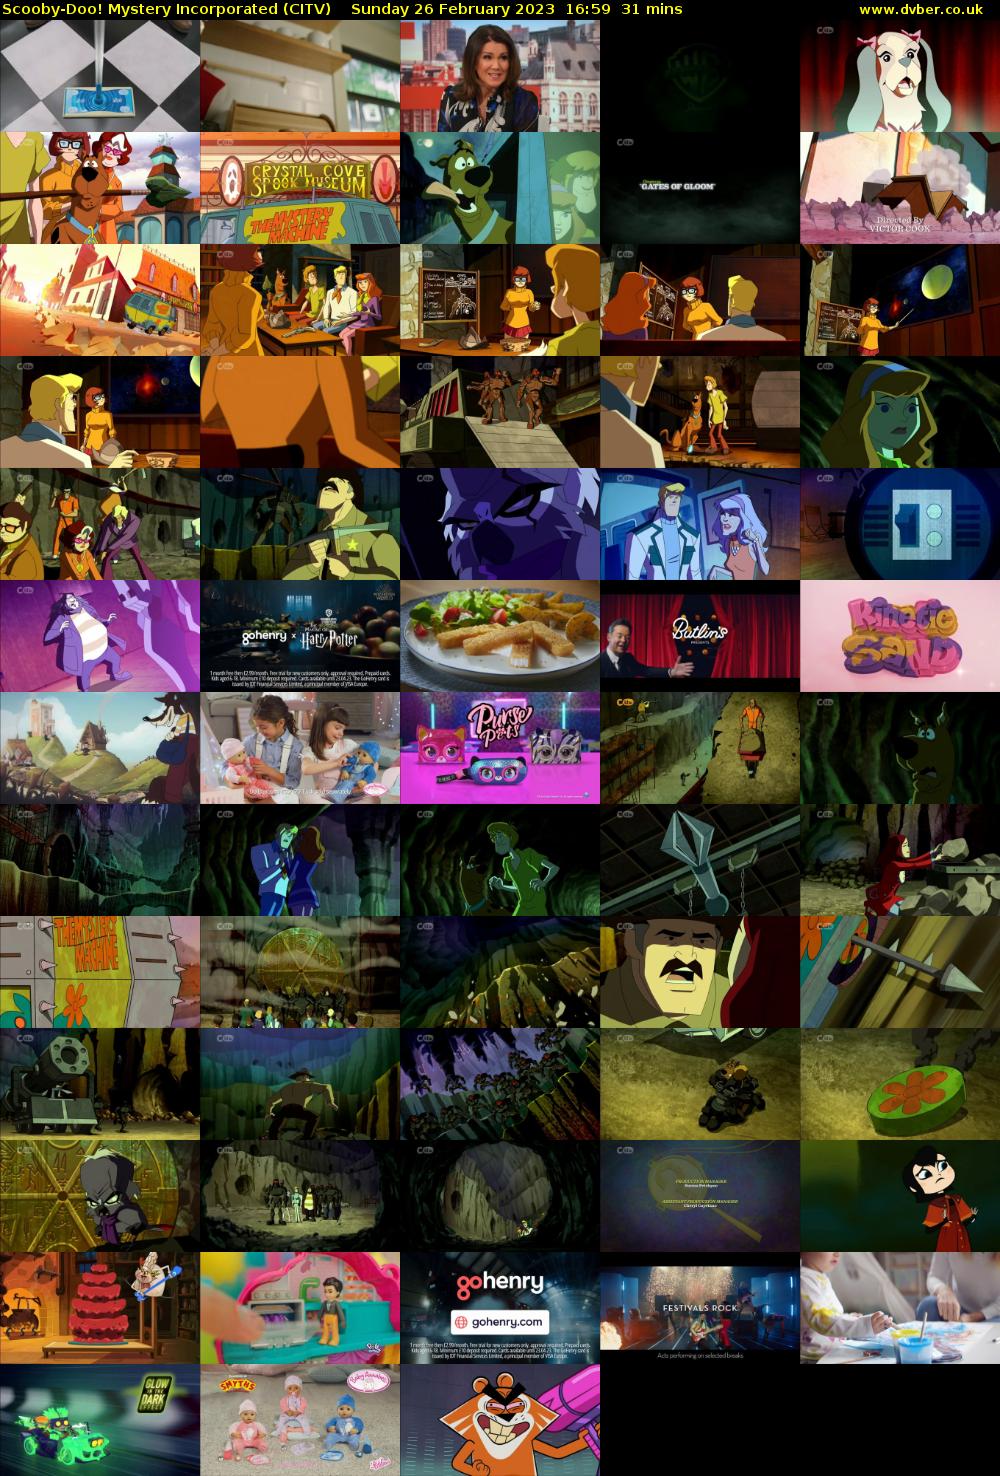 Scooby-Doo! Mystery Incorporated (CITV) Sunday 26 February 2023 16:59 - 17:30